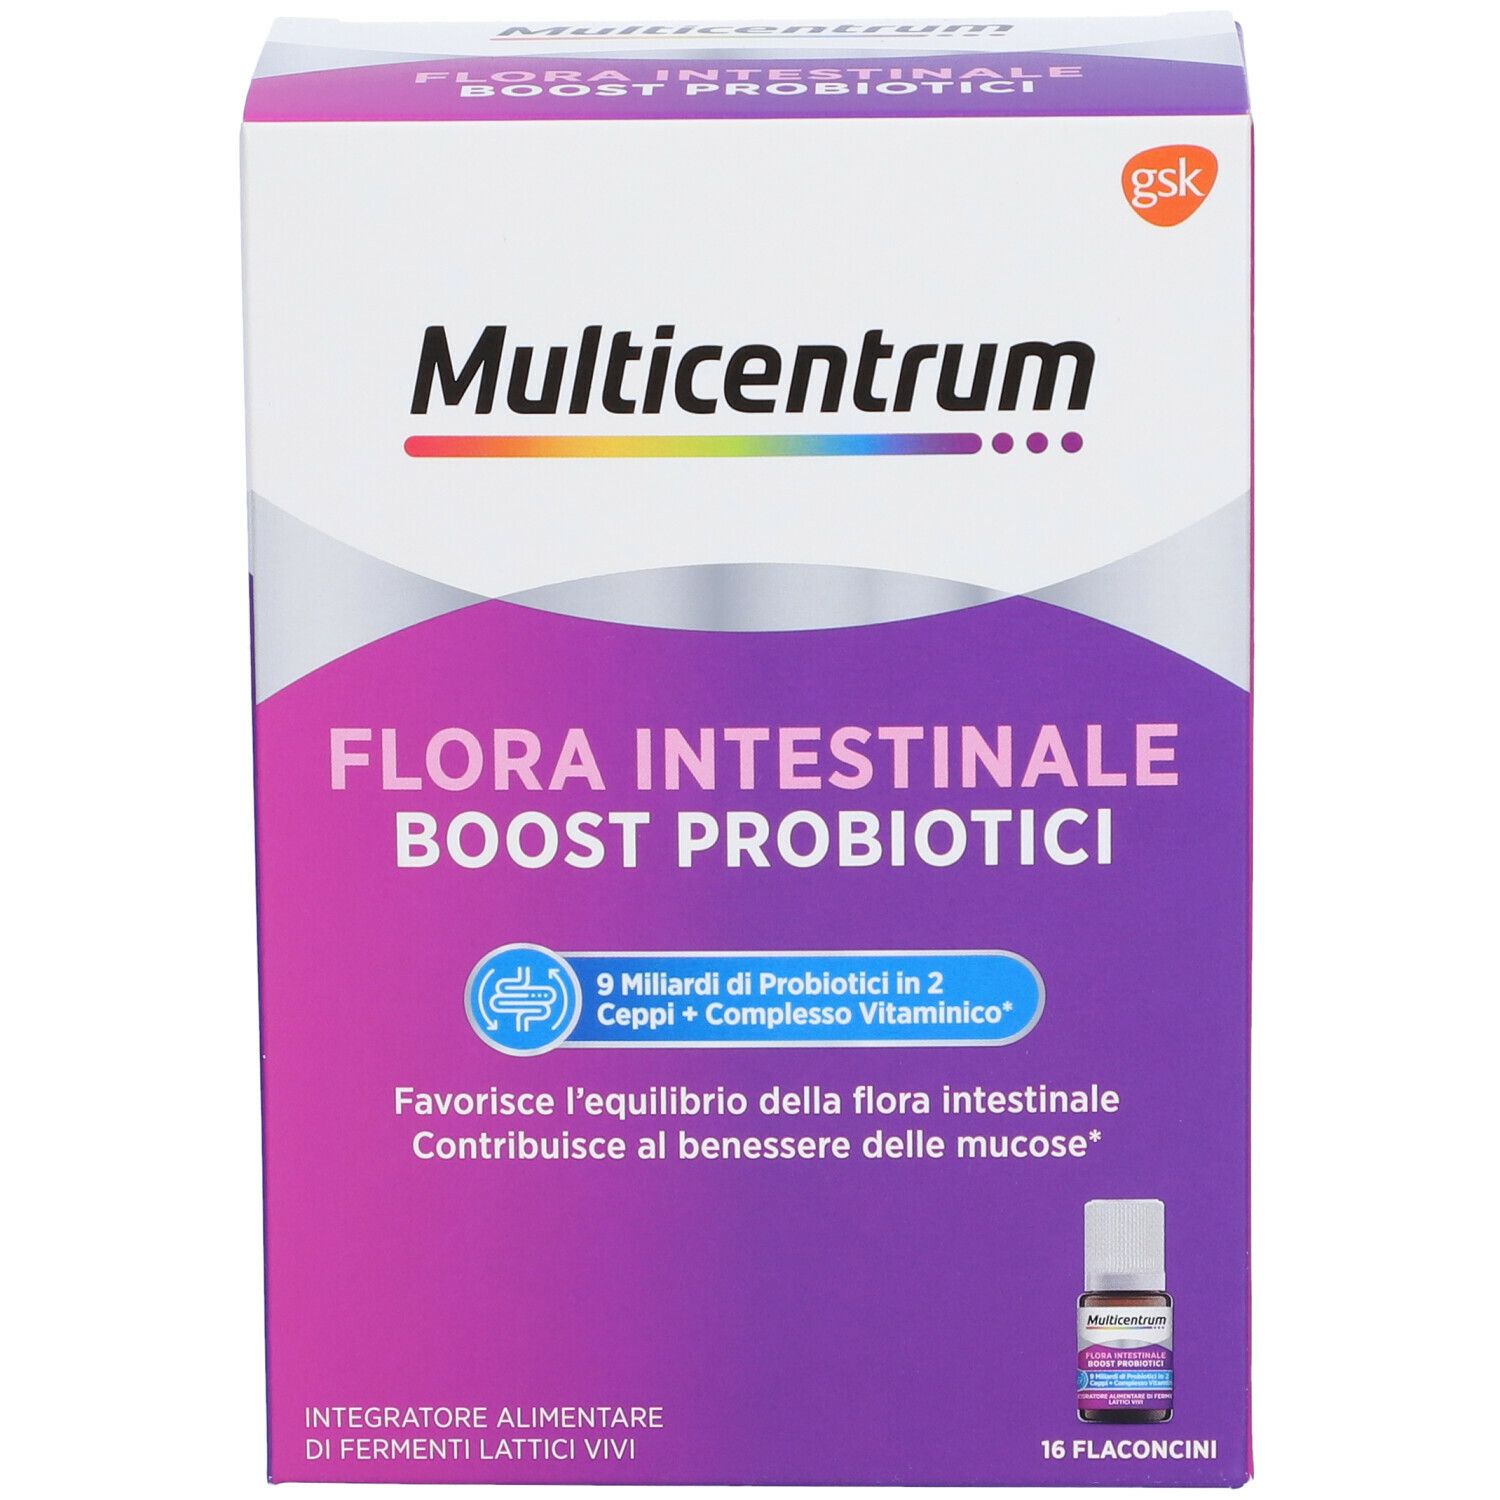 Multicentrum Flora Intestinale Boost Probiotici Integratore Fermenti Lattici Intestino